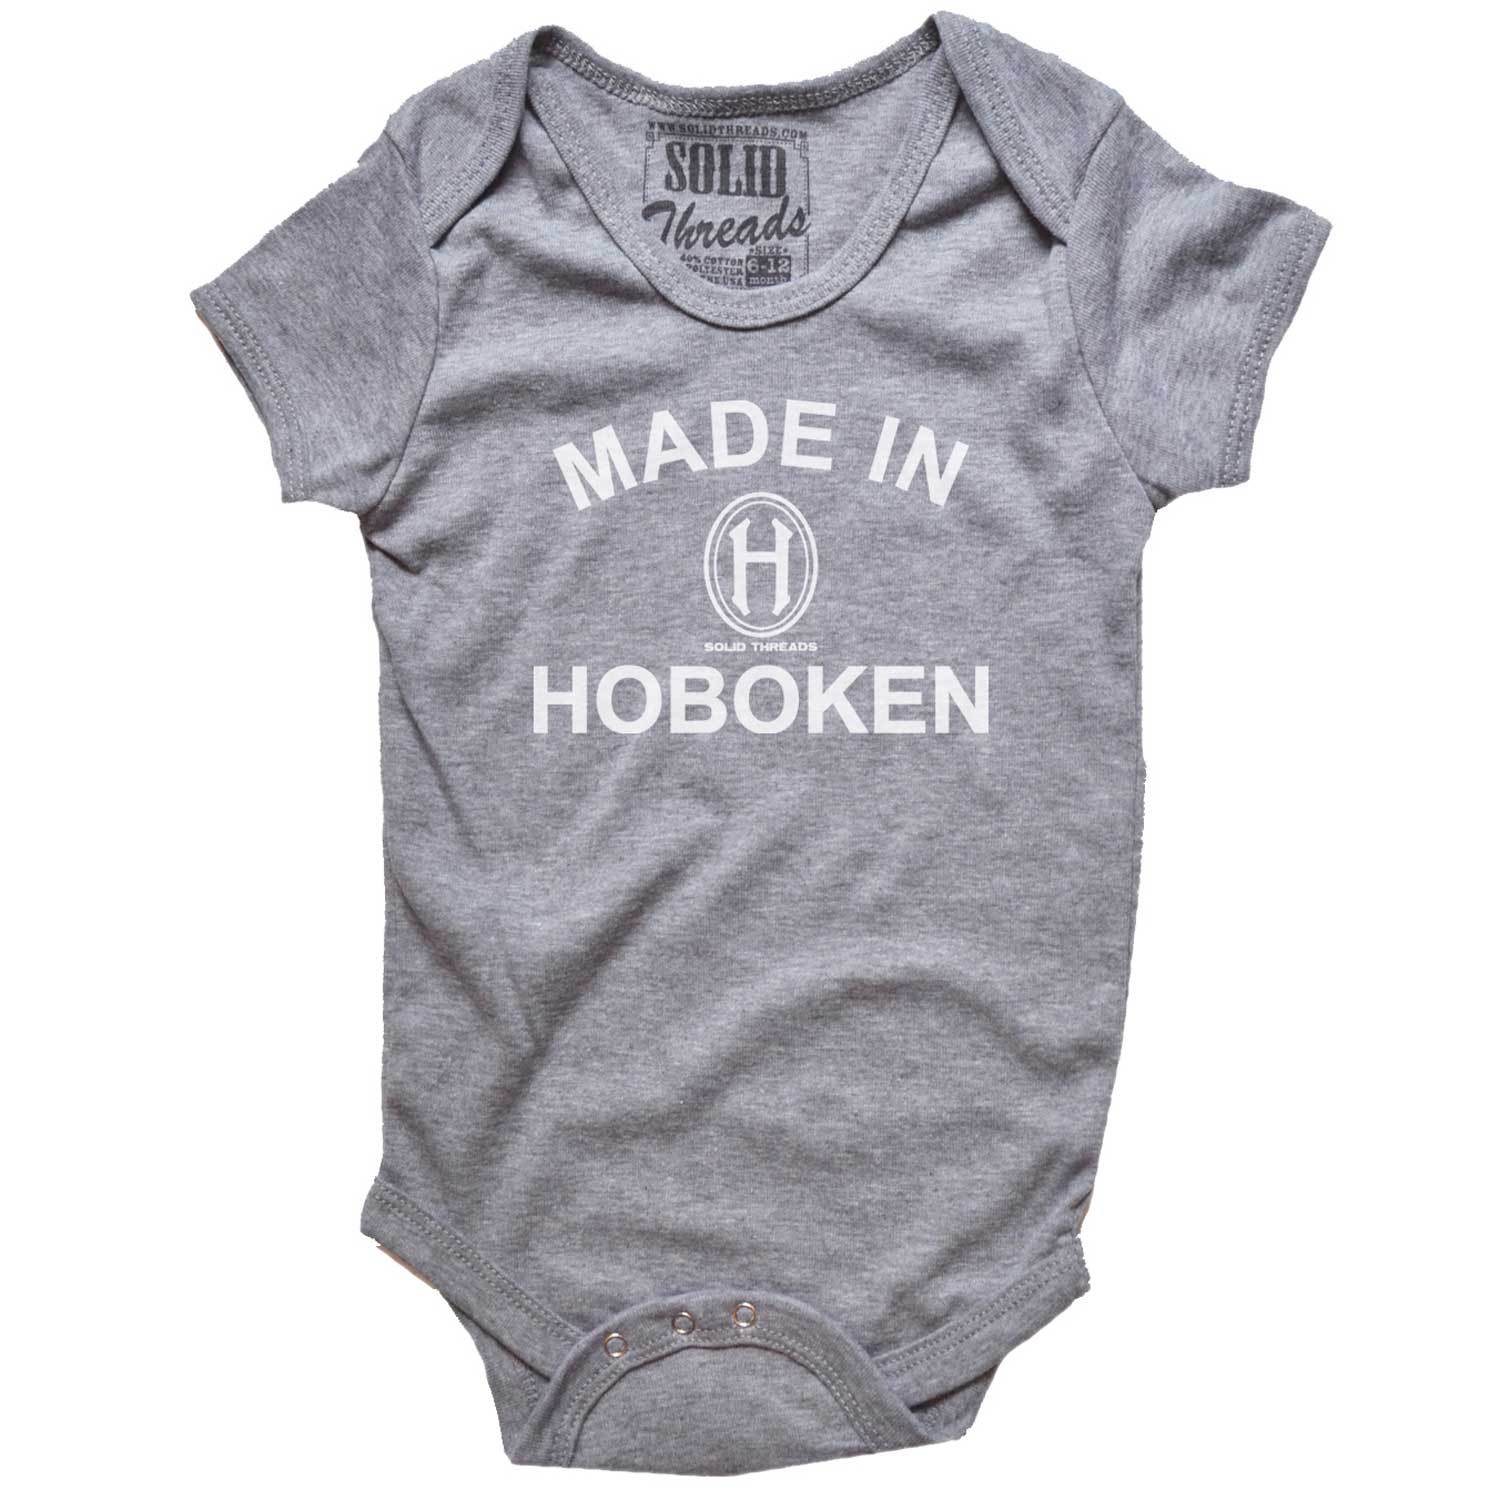 Baby Made in Hoboken Vintage Inspired Onesie | Retro New Jersey Graphic Romper | Solid Threads